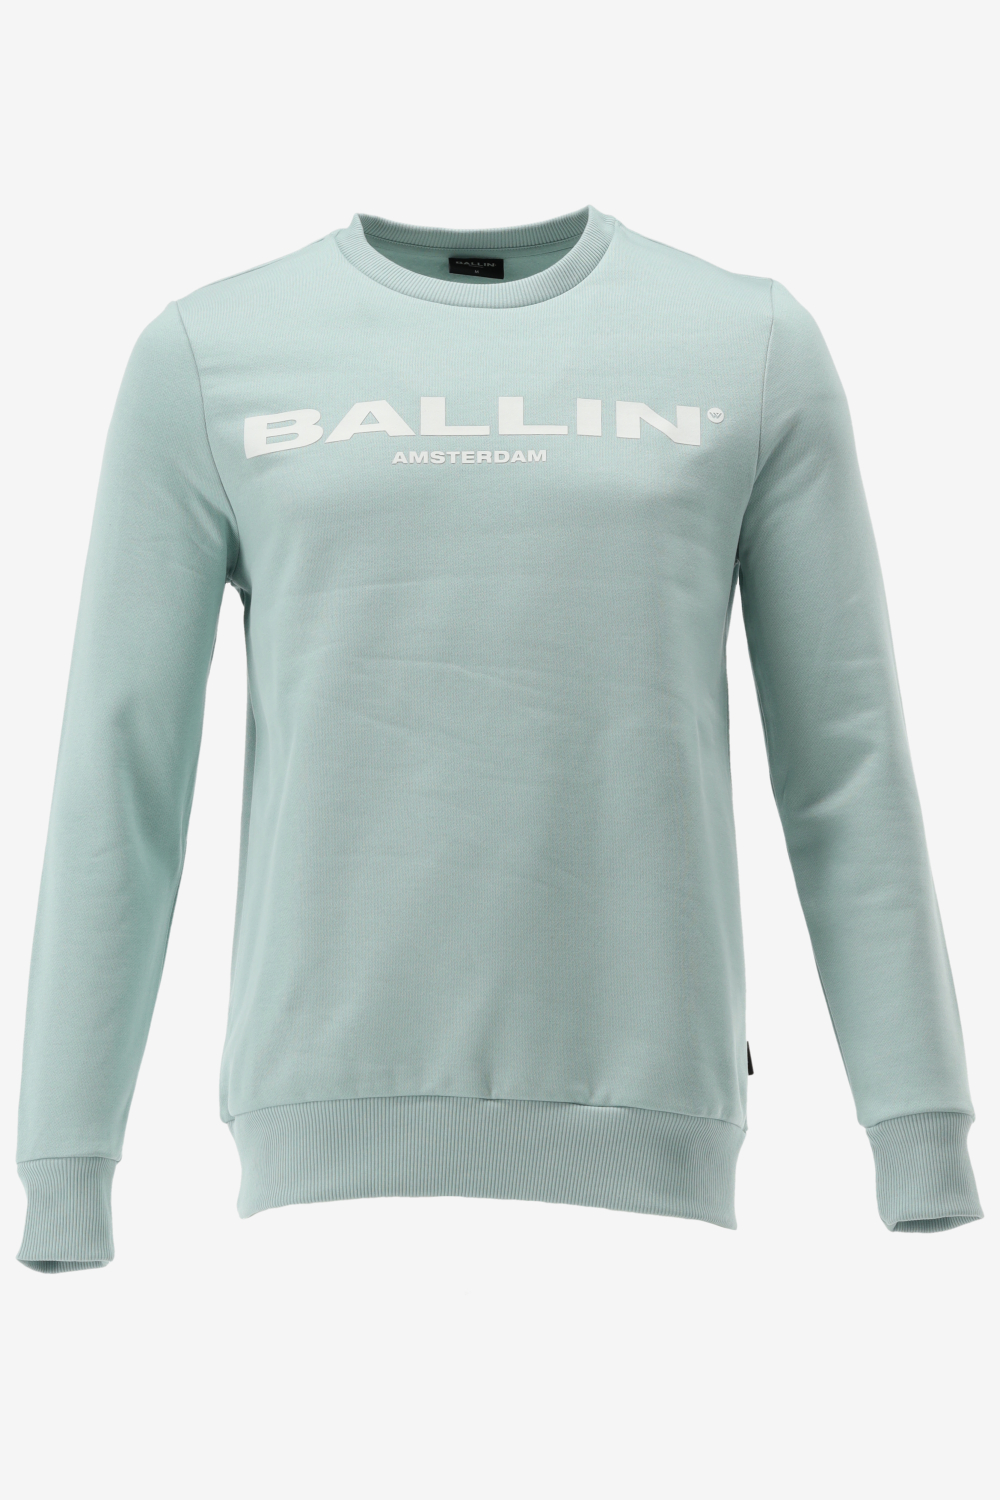 Ballin Amsterdam -  Heren Slim Fit  Original Sweater  - Groen - Maat XXL